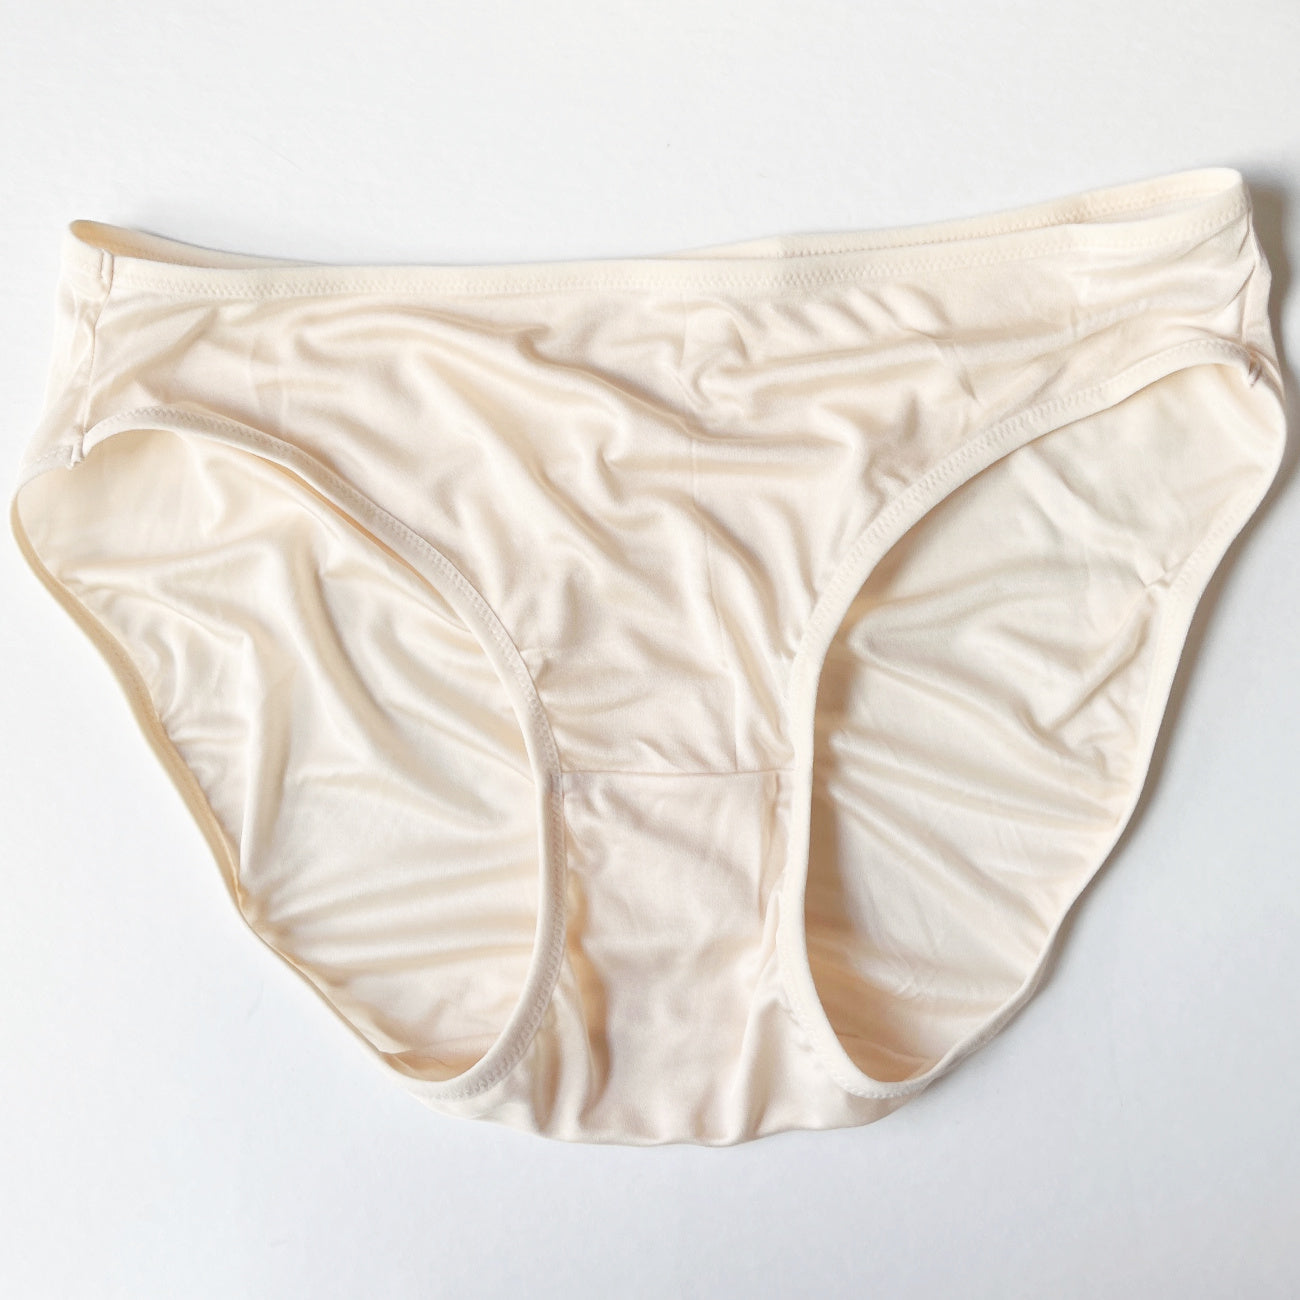 100% Natural Mulberry Silk Underwear for Women High Waist Breathable Silk  Briefs Seamless Ladies Panties Lingerie (Color : Dark Skin, Size 